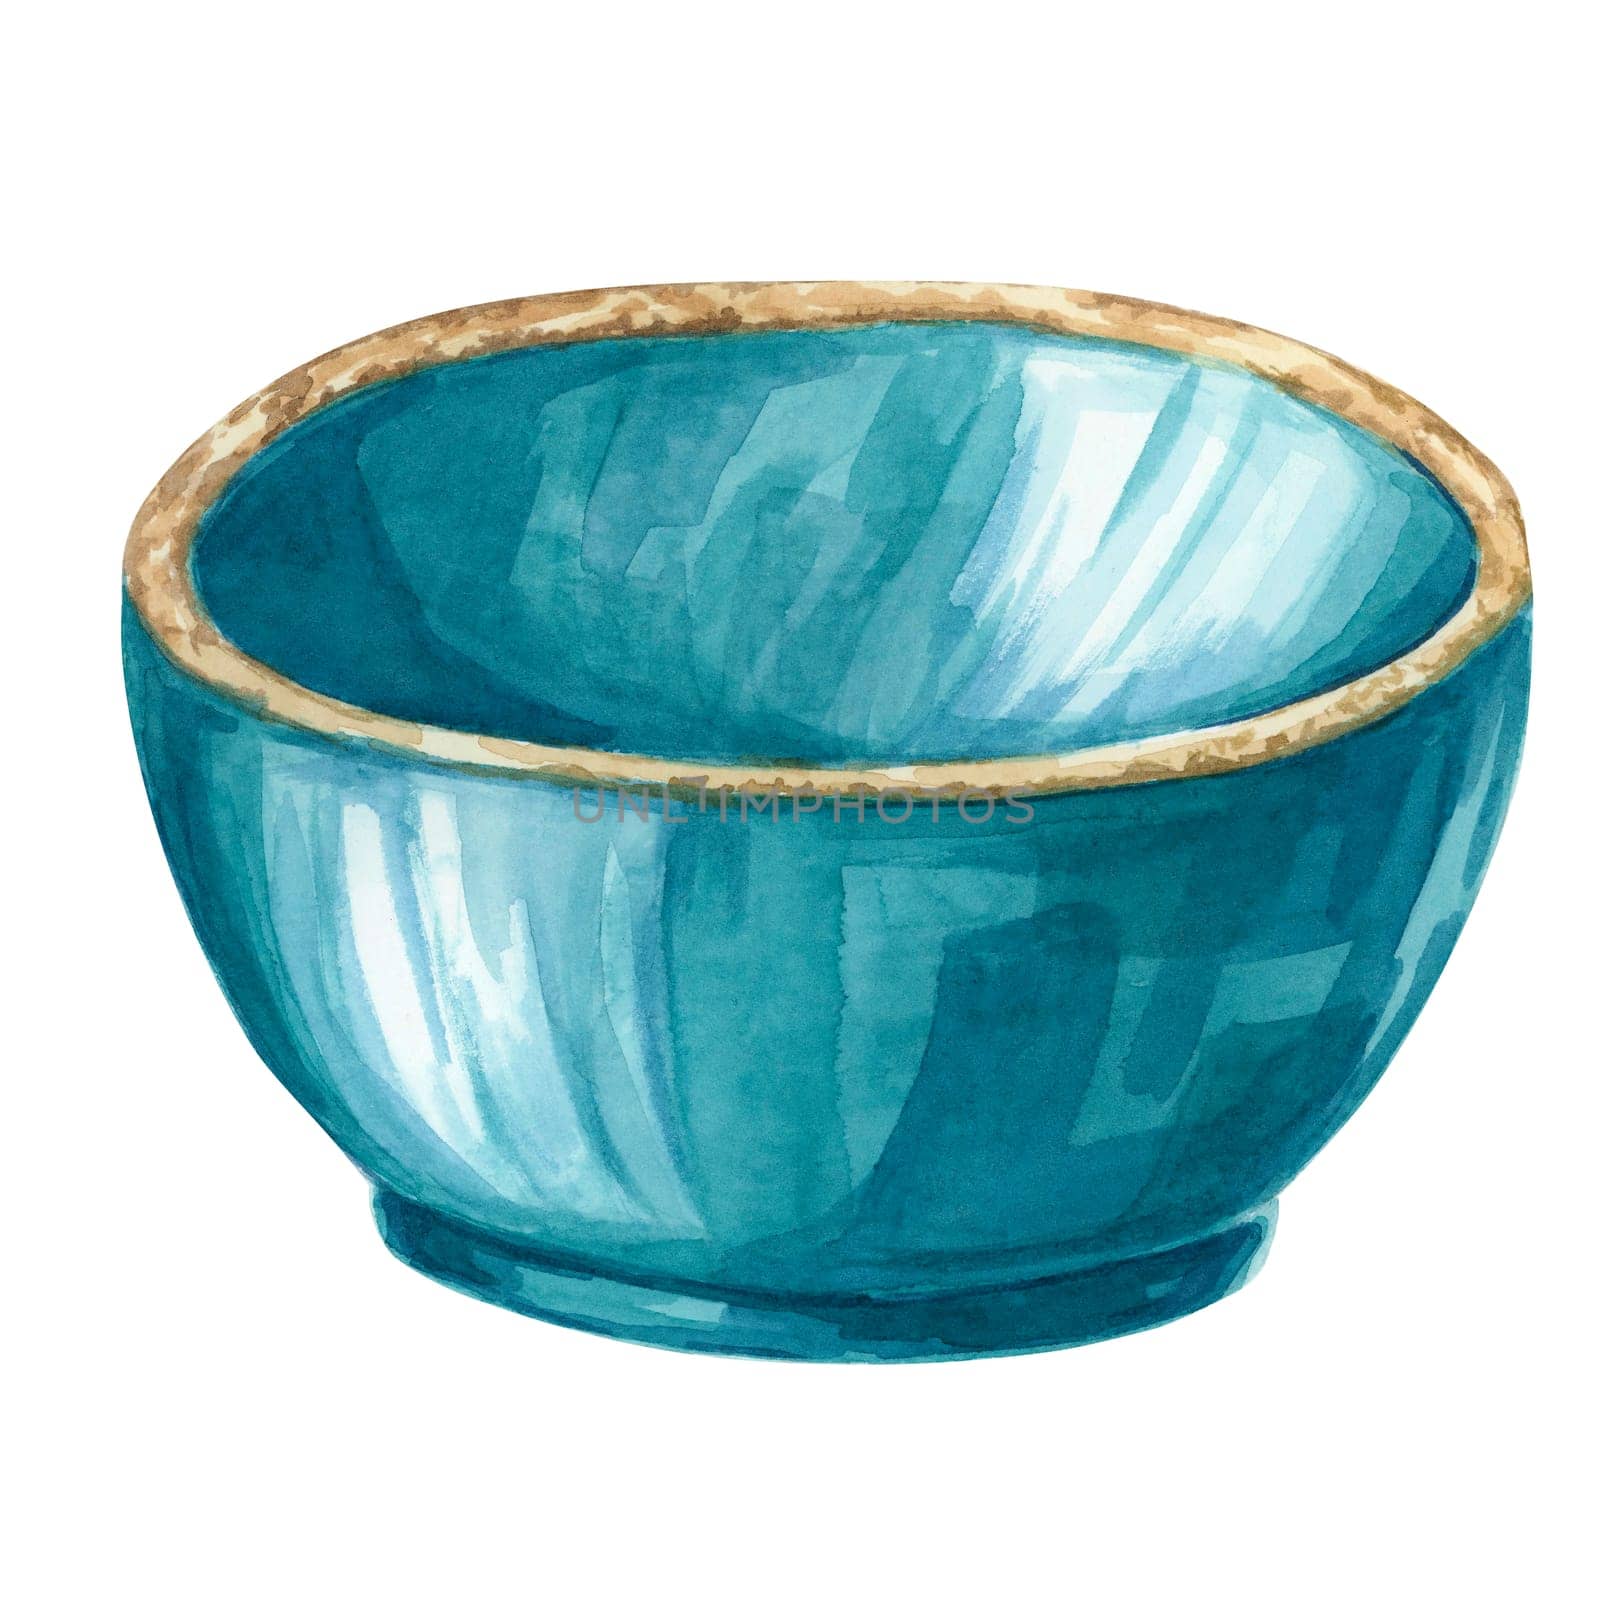 Empty ceramic bowl in watercolor by Fofito